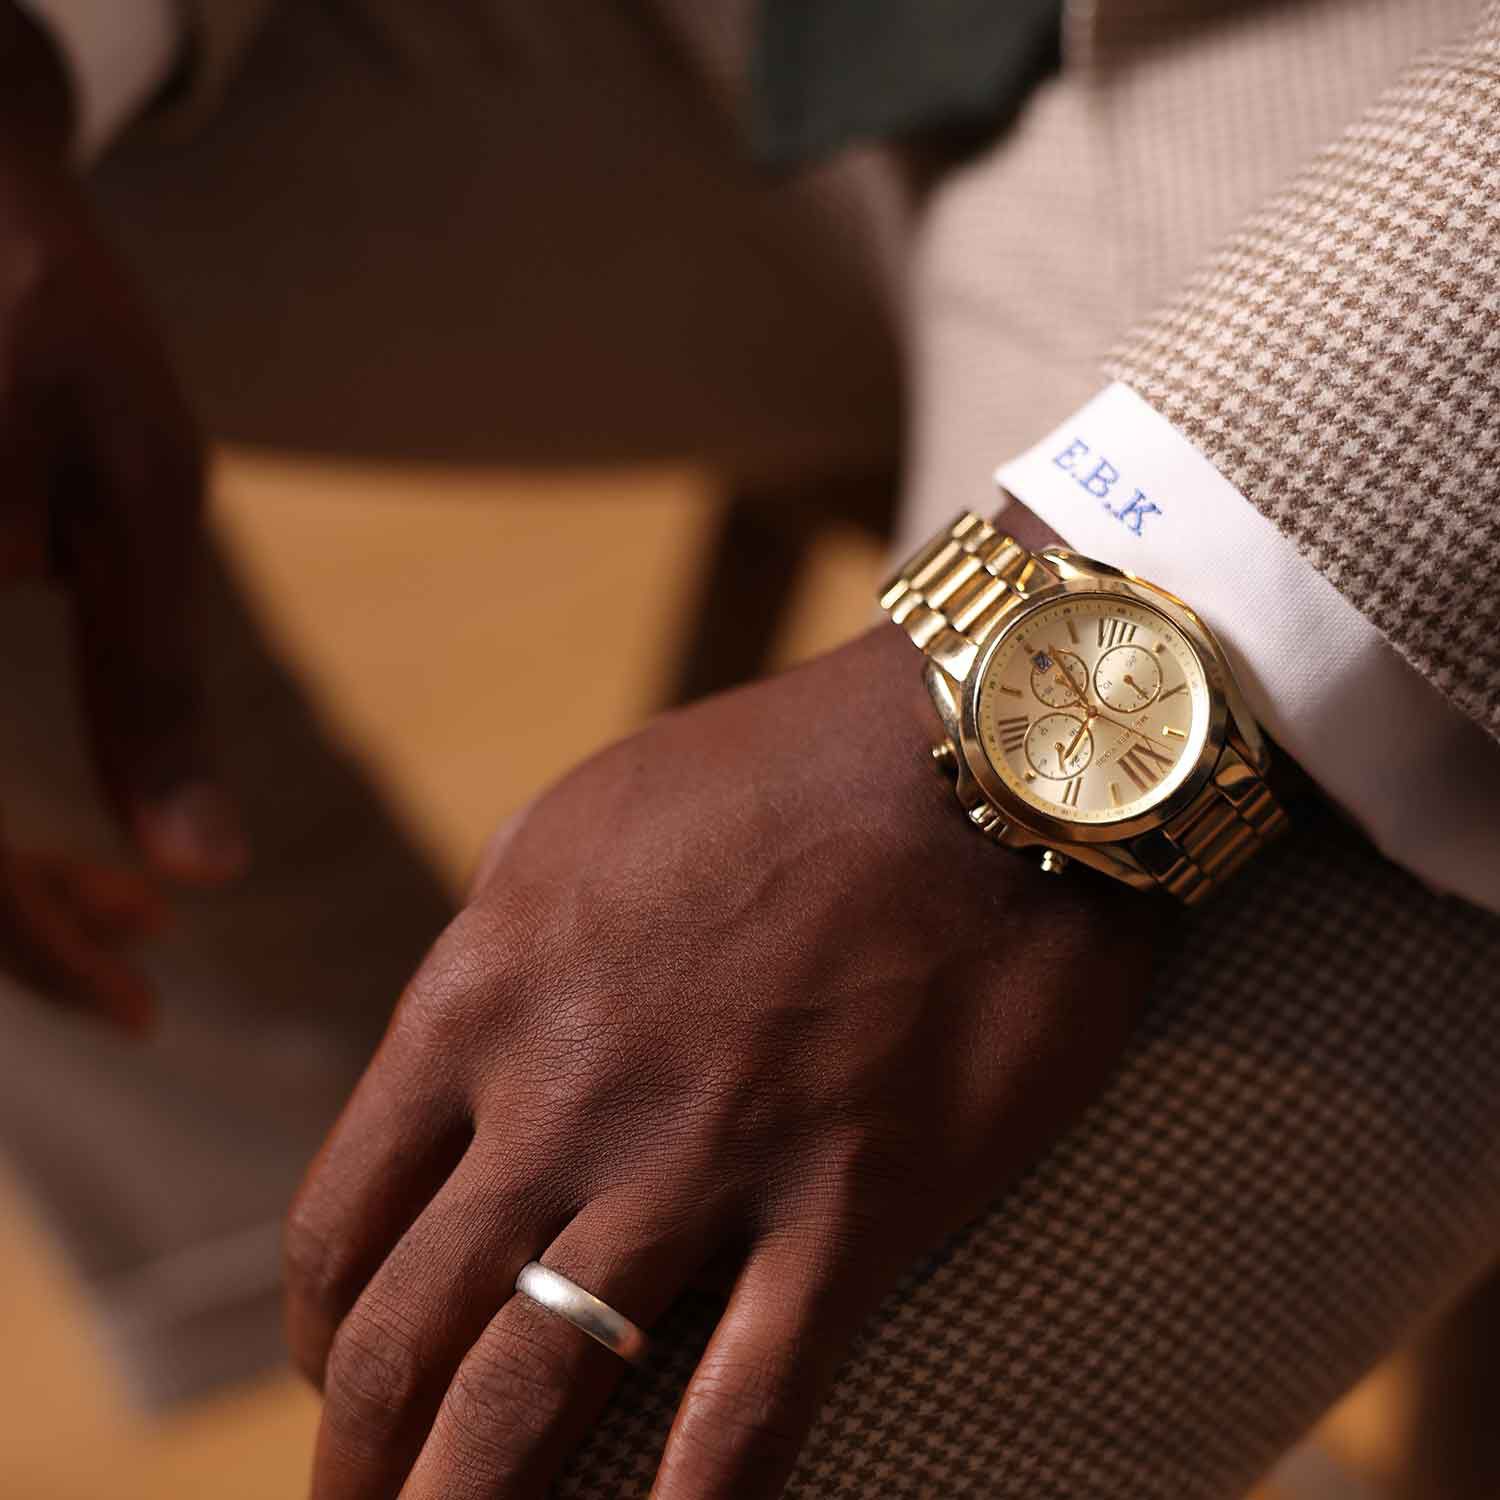 Michael Kors MK8599 Grayson Gold Watch 47mm